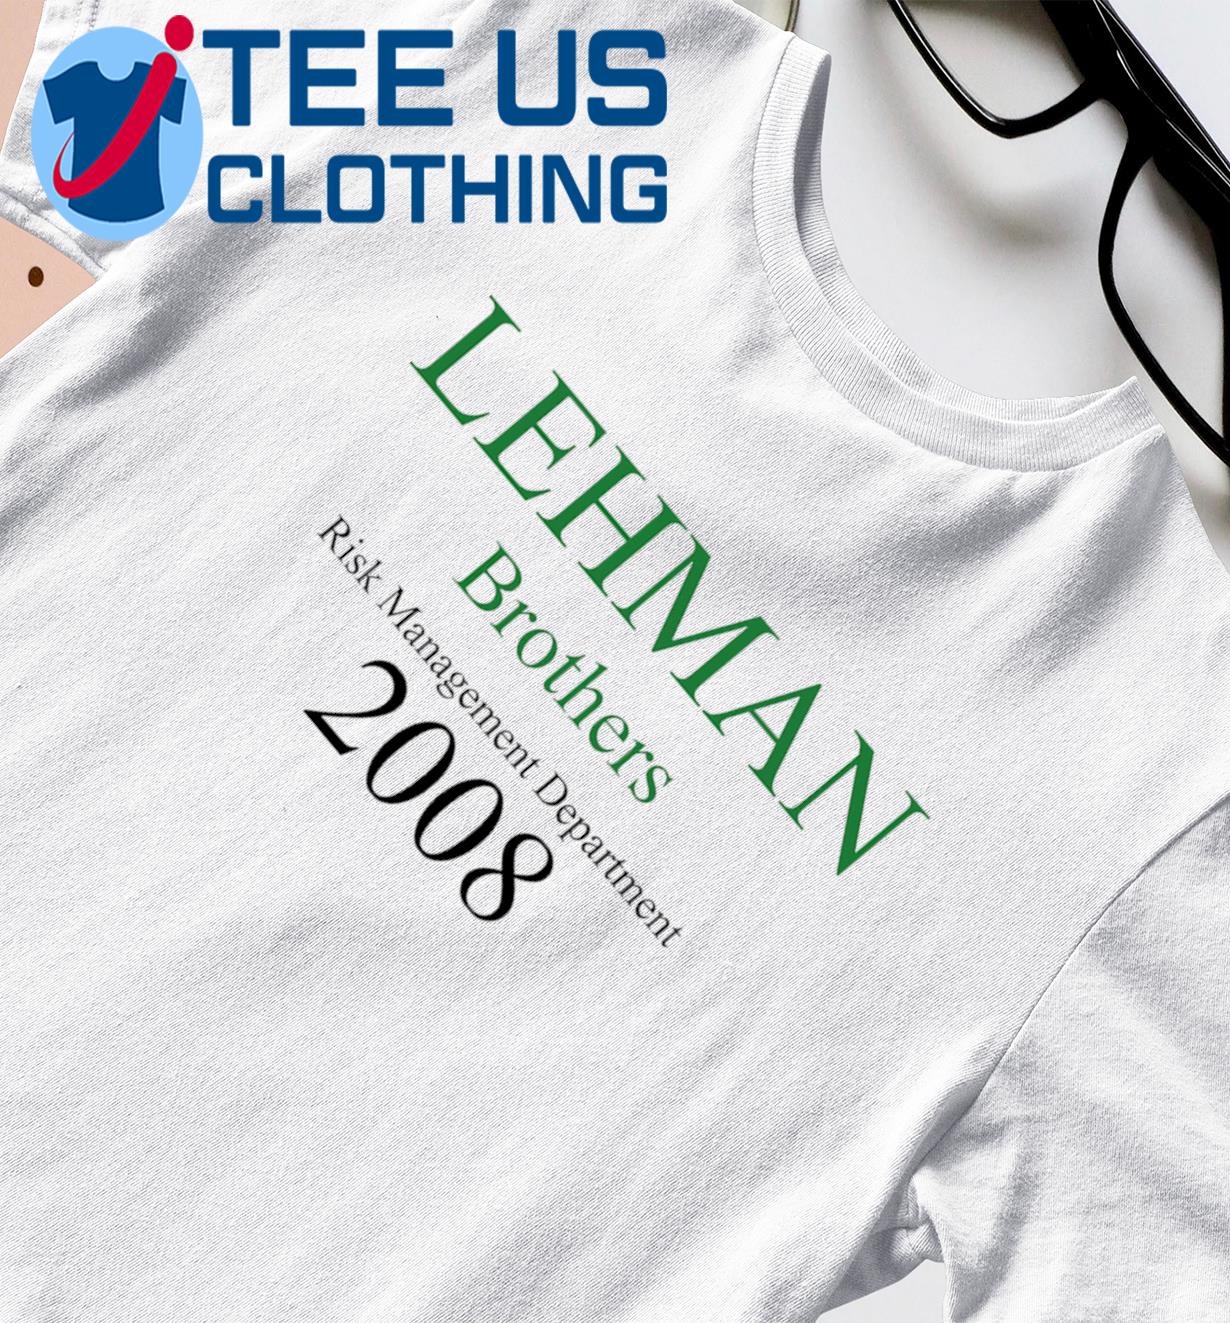 Lehman Brothers Risk Management Department 2008 T-Shirt